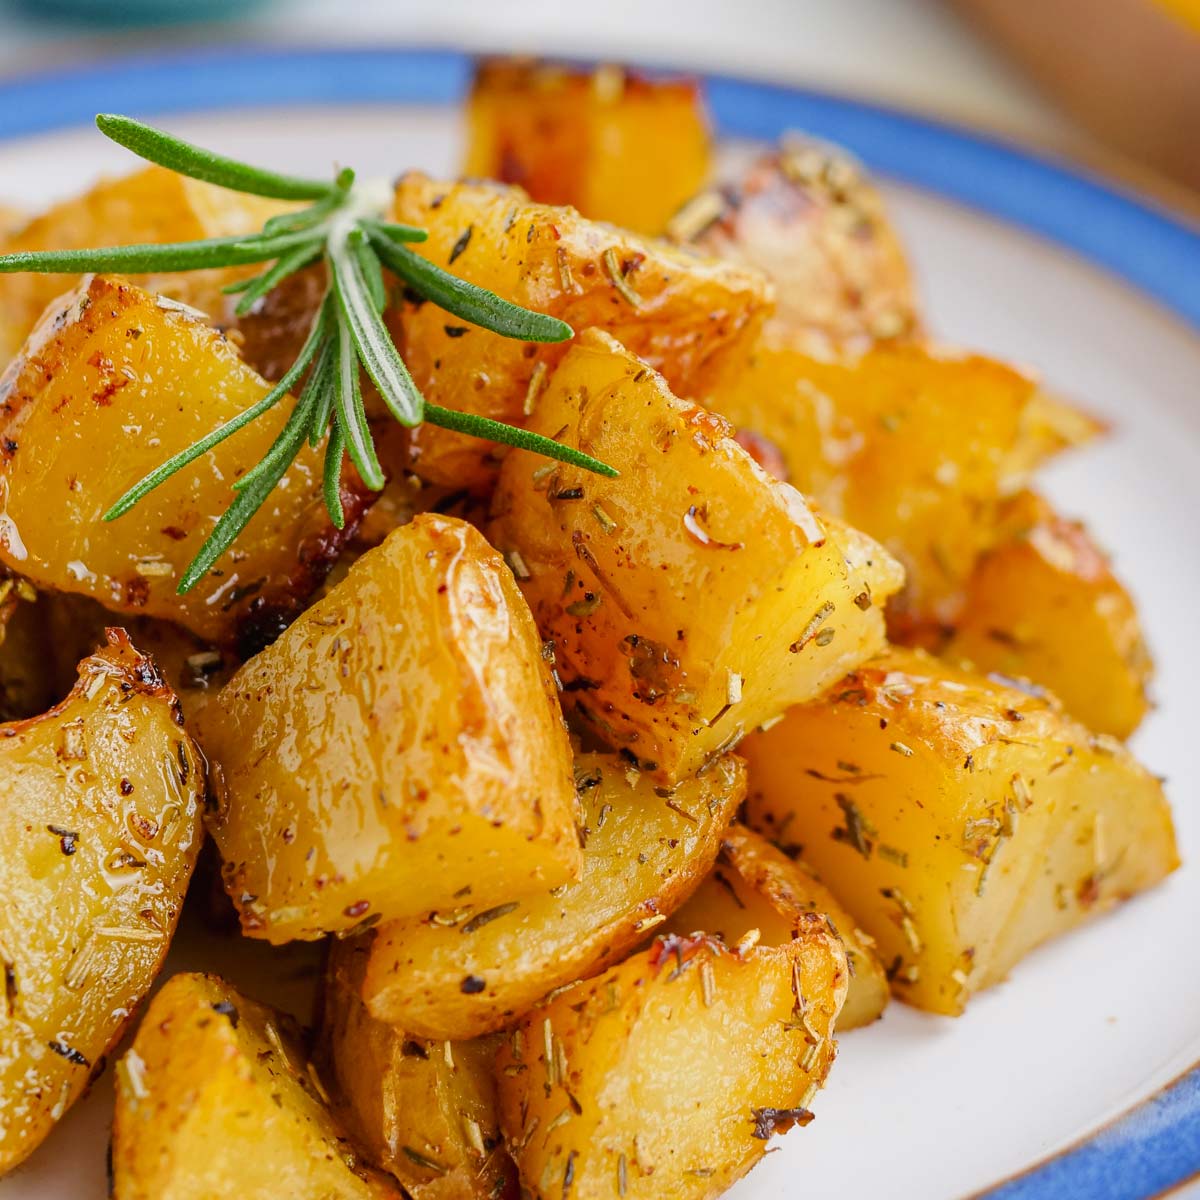 https://www.texanerin.com/content/uploads/2015/01/greek-potatoes-1200.jpg